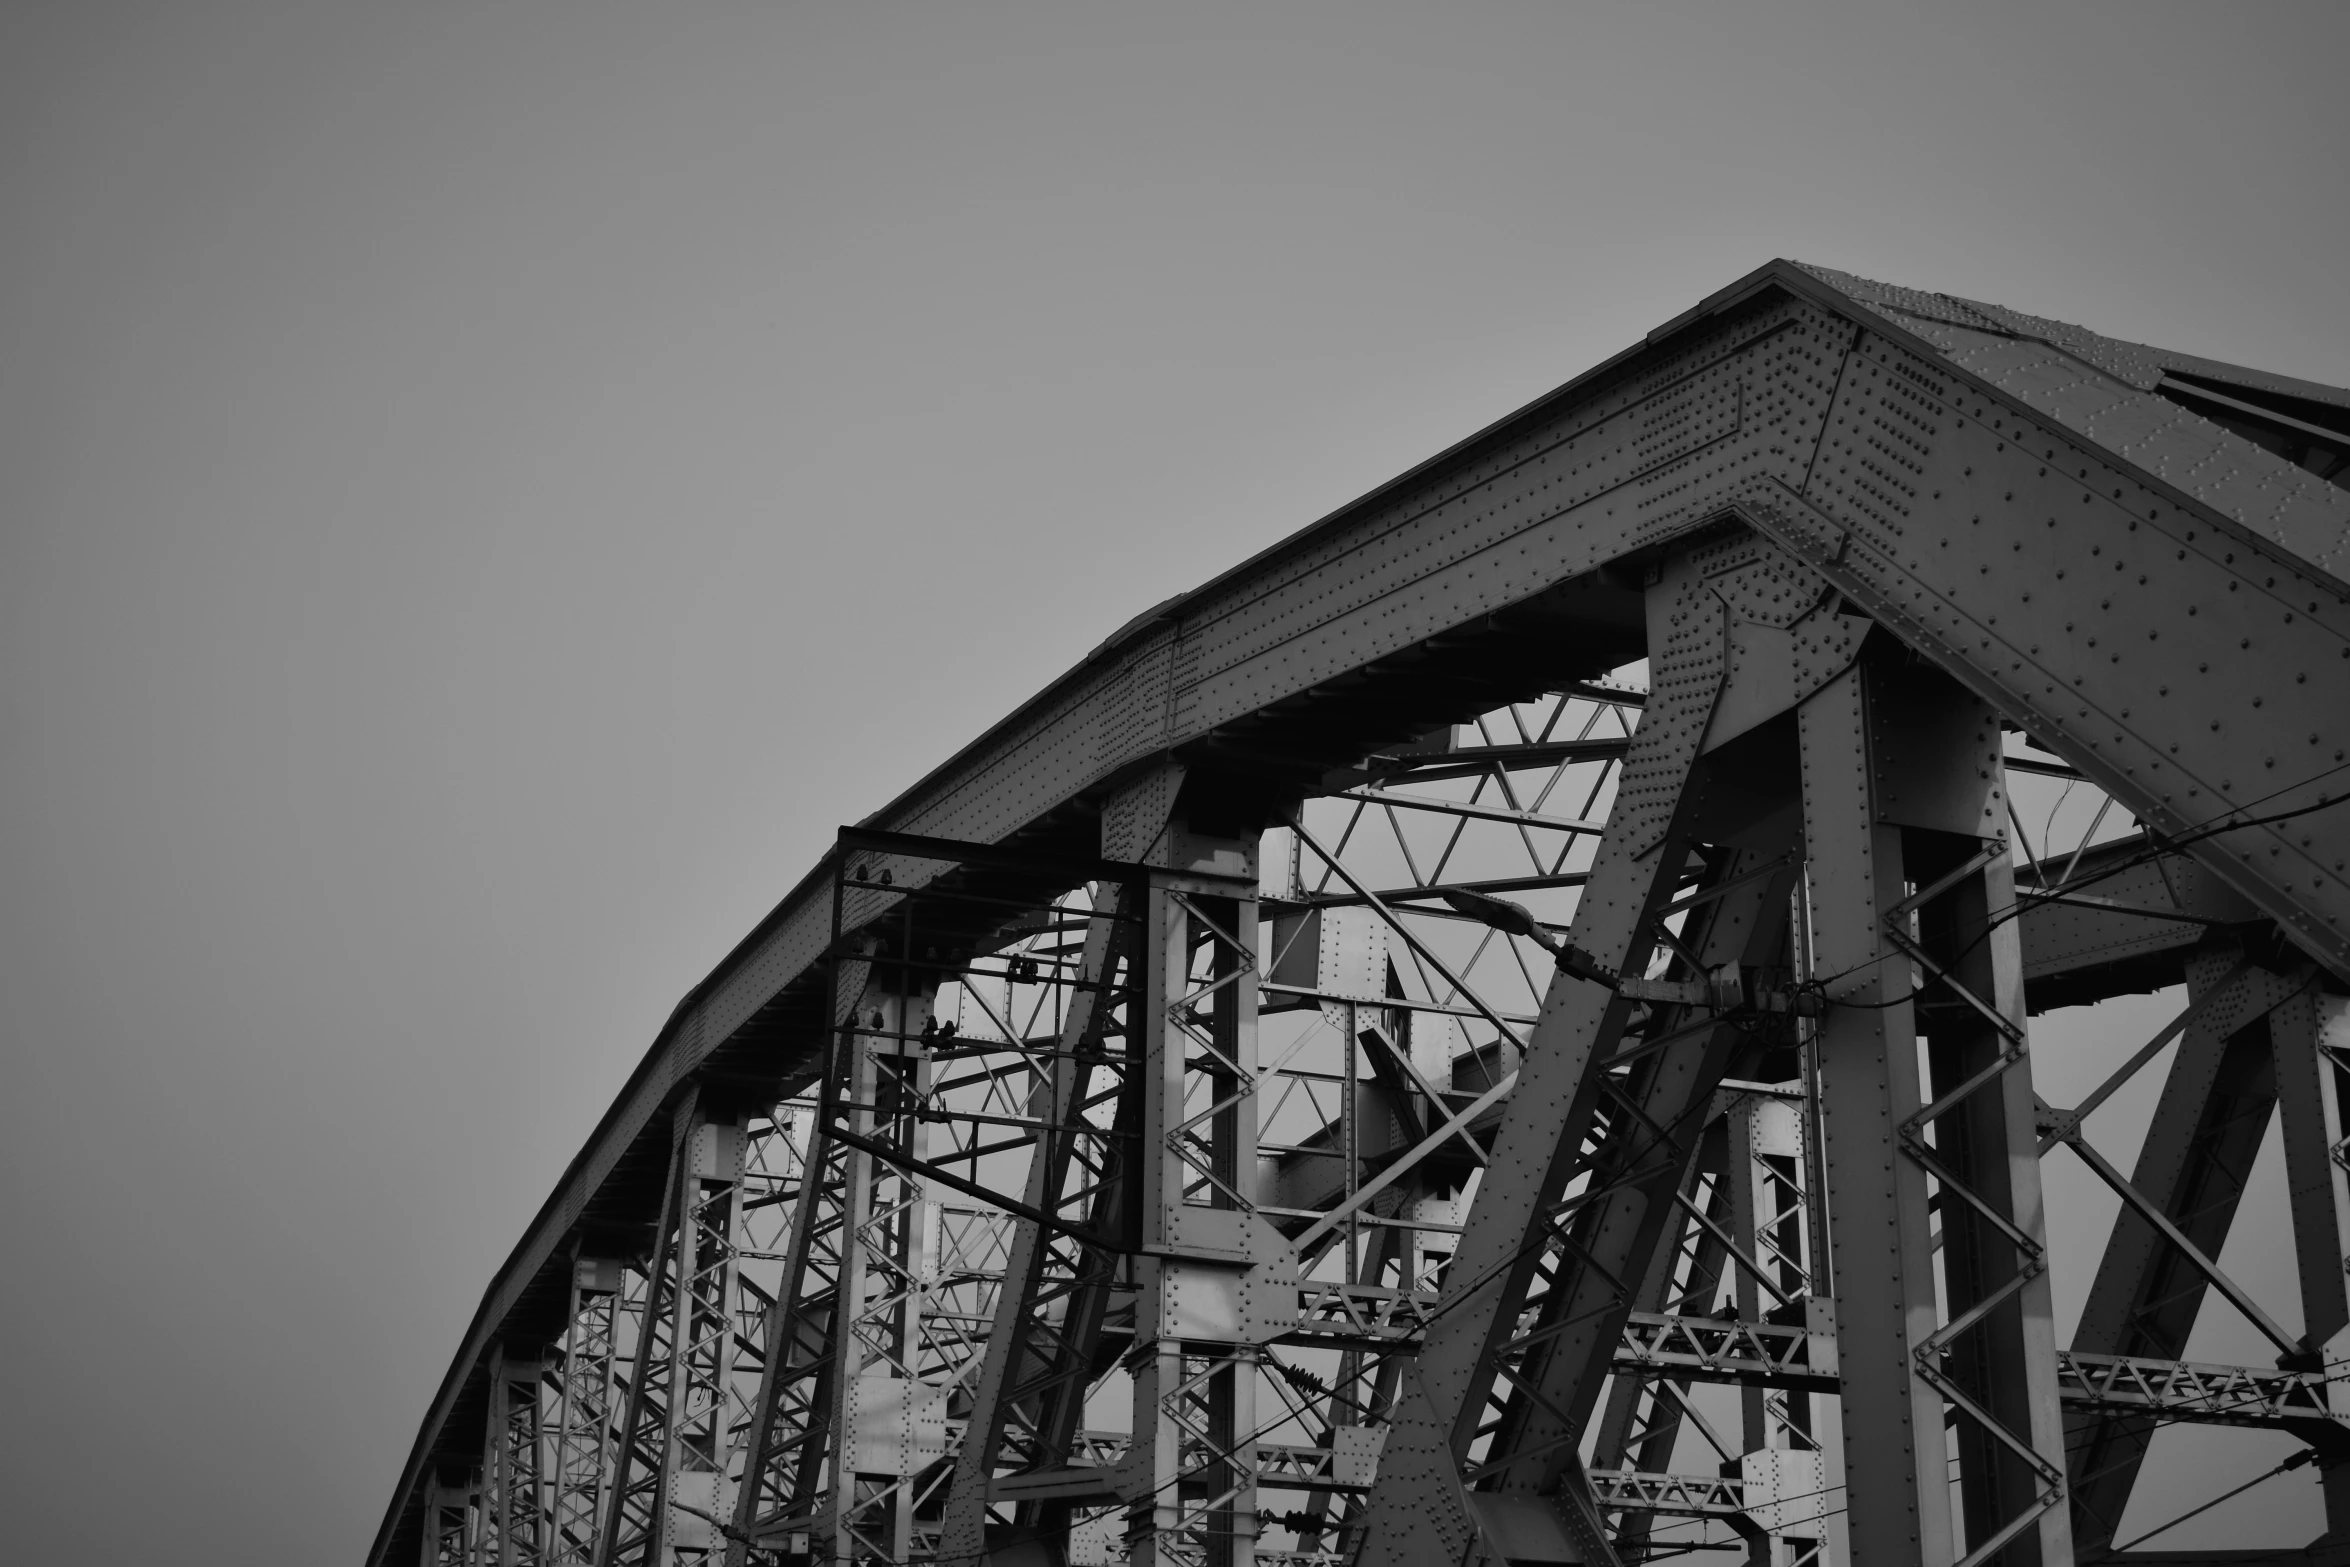 the underside of an old steel bridge